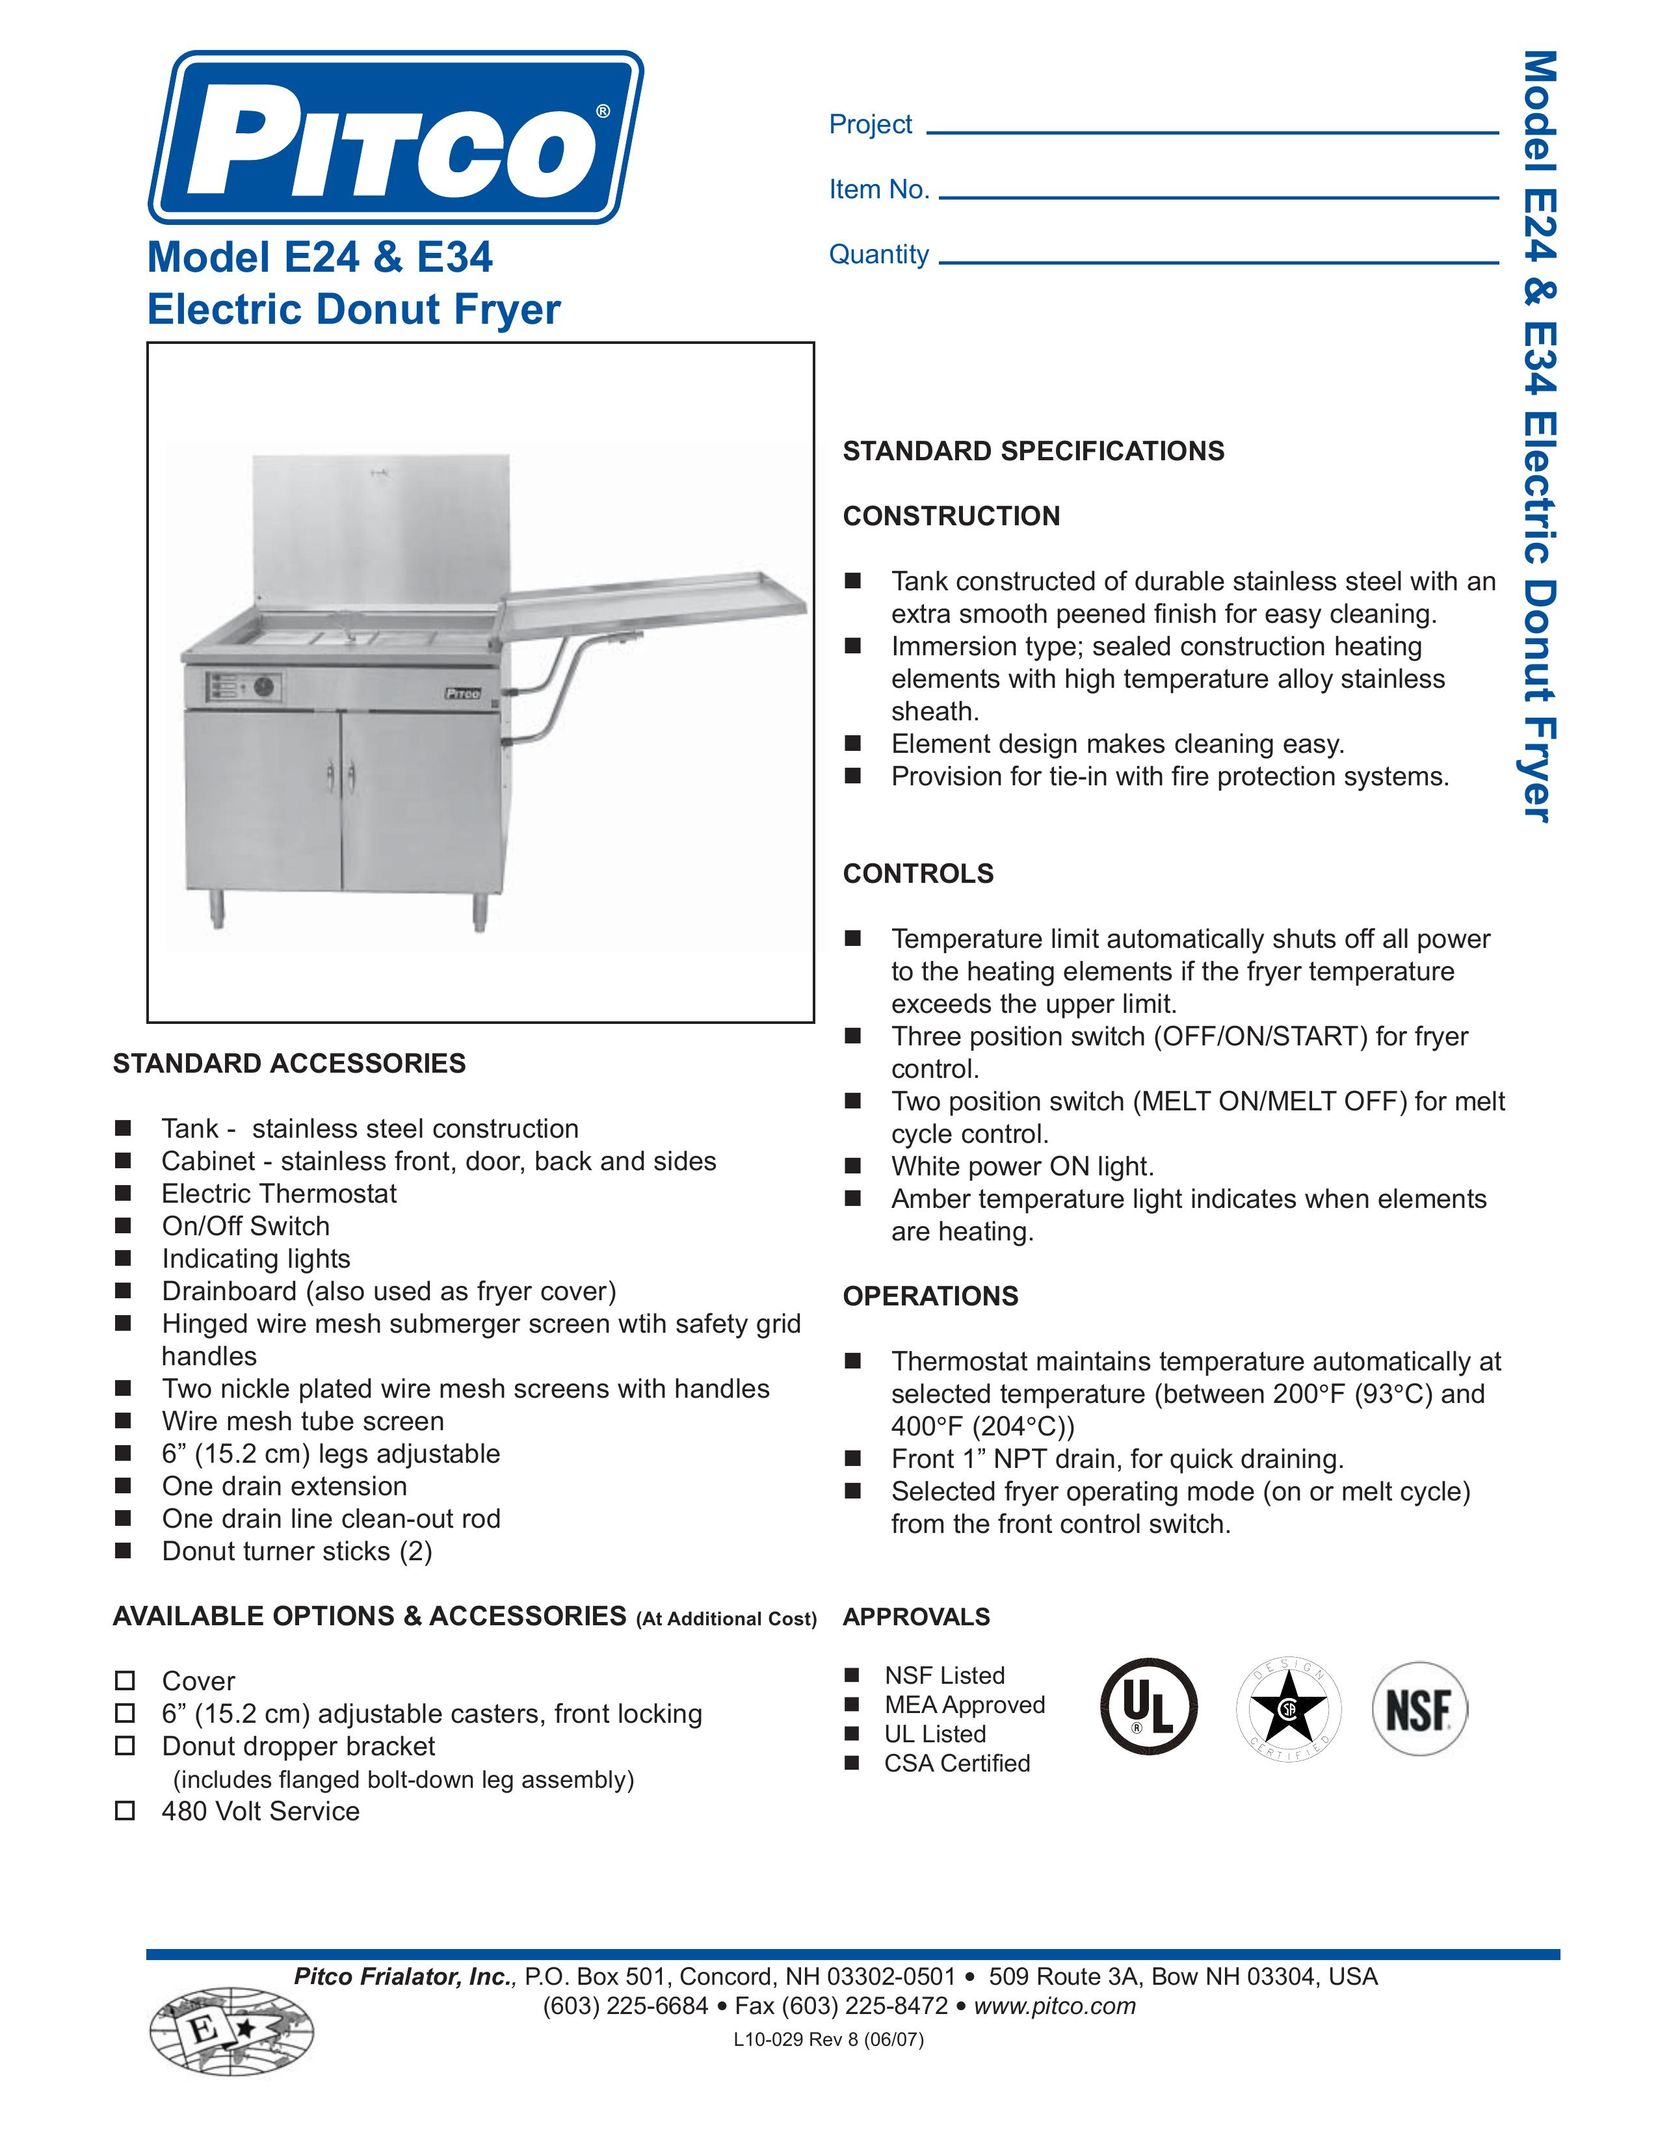 Pitco Frialator E34 Fryer User Manual